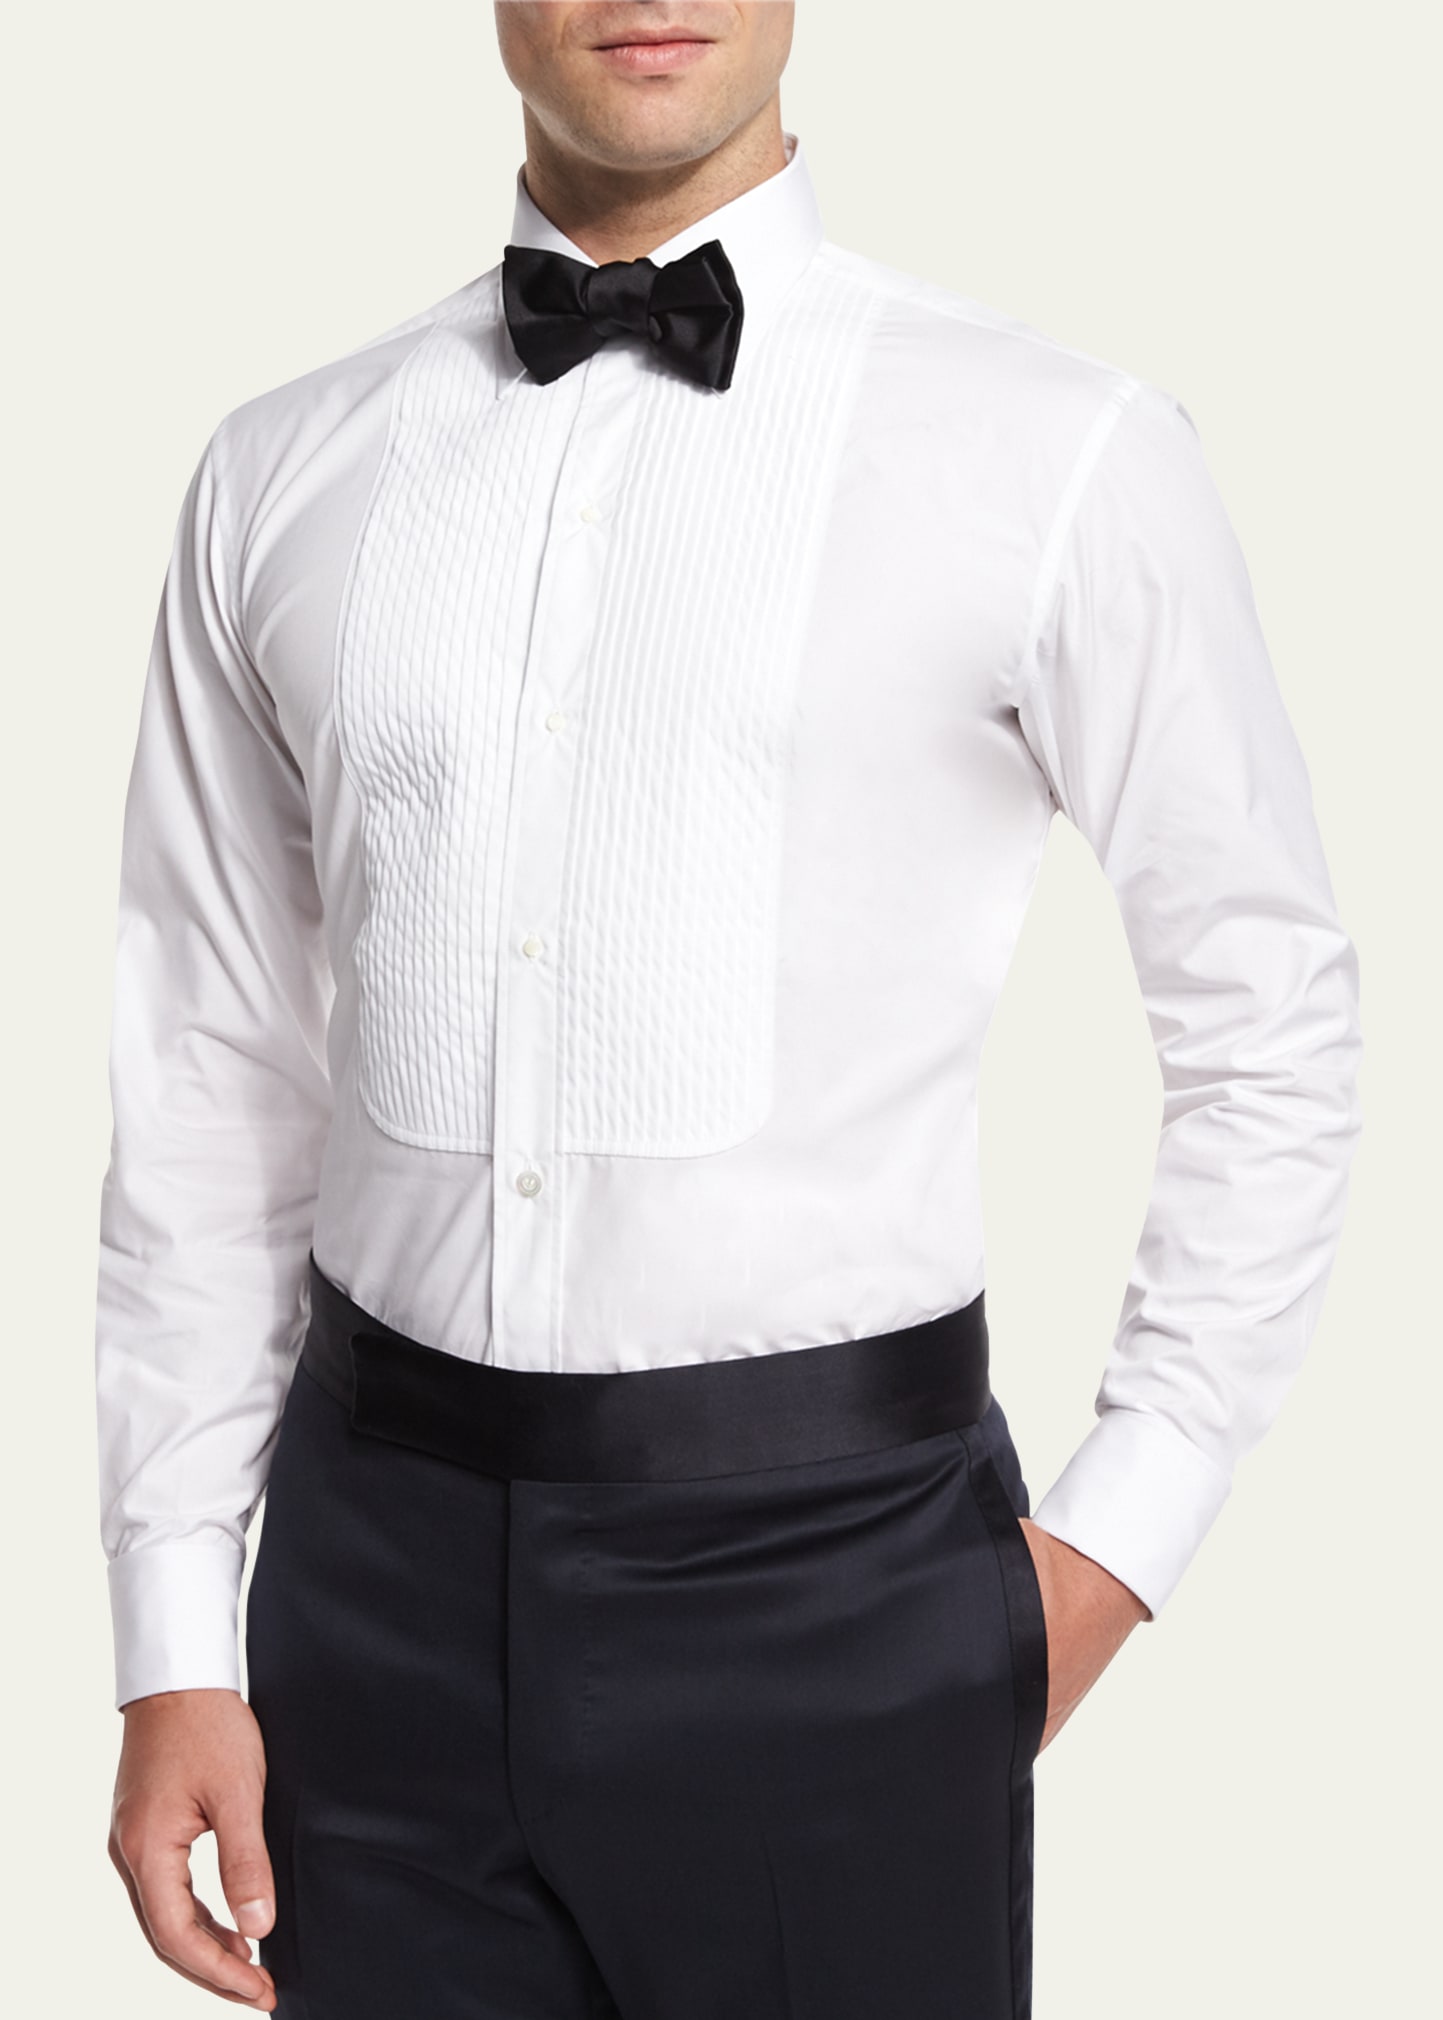 Basic Pleated Cotton Dress Shirt, White